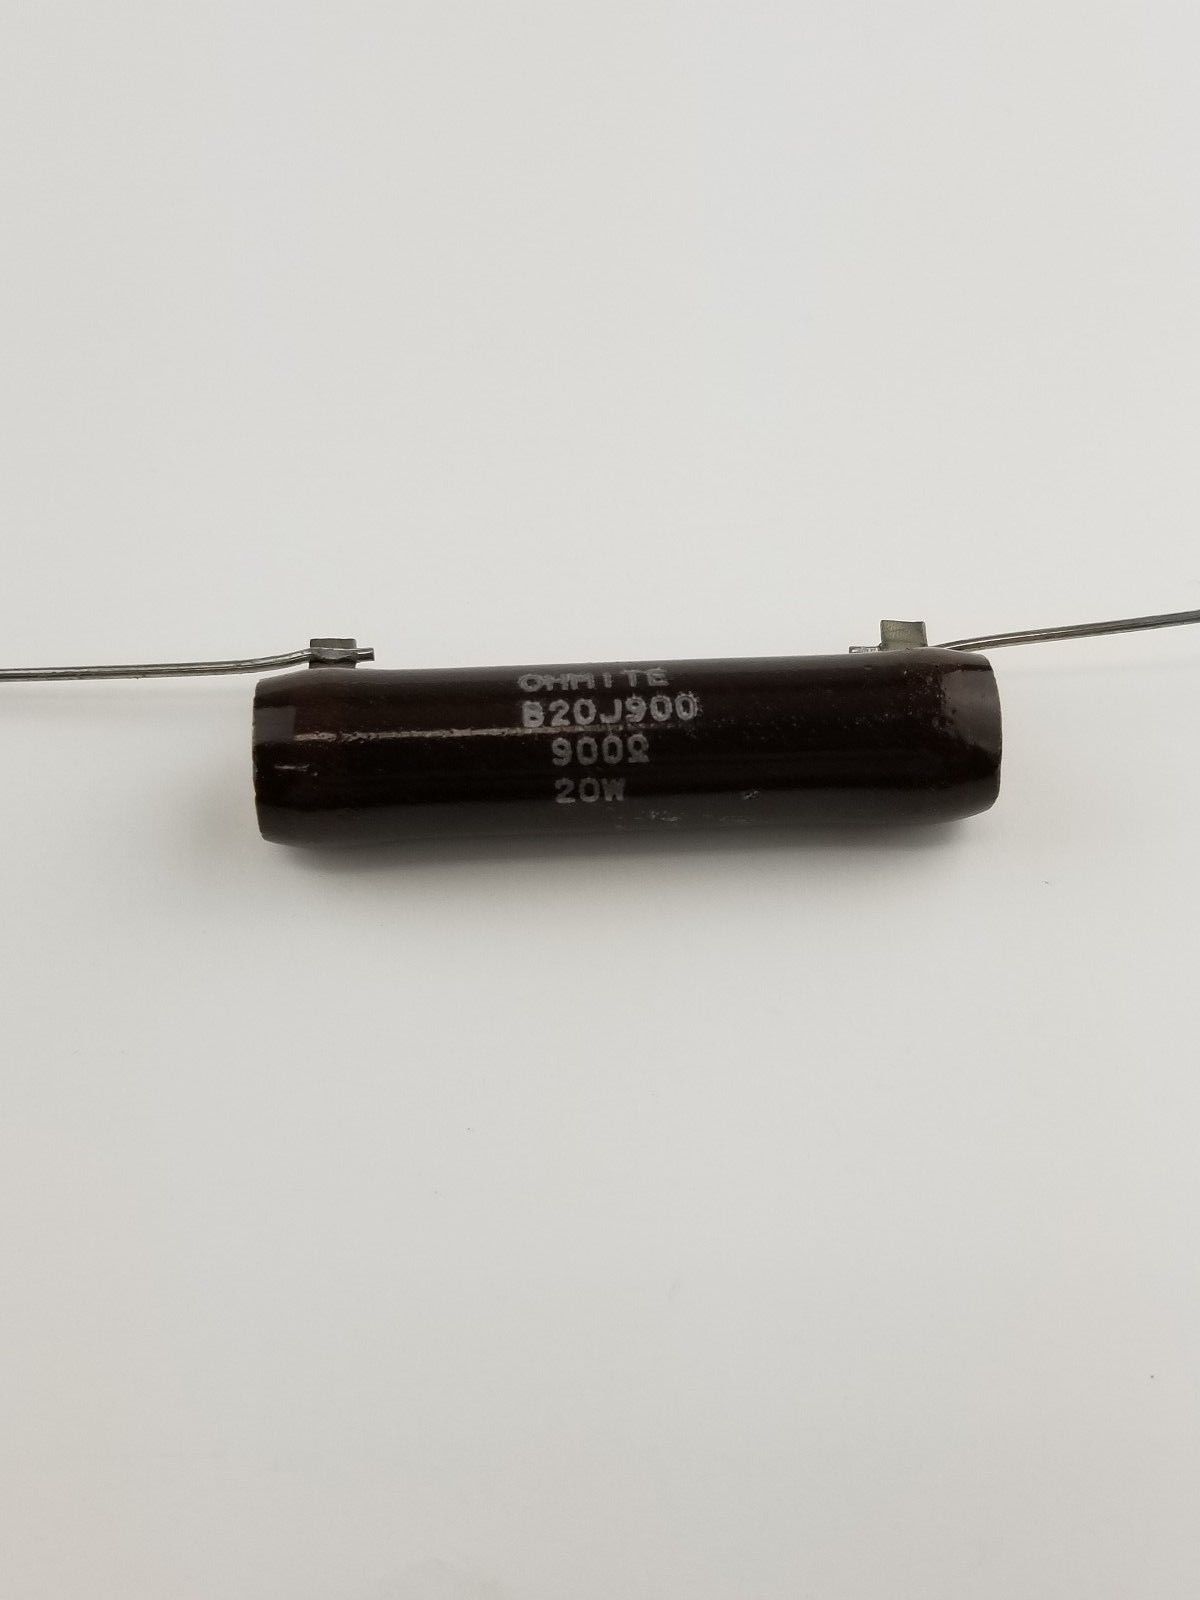 Resistores bobinados - a través de orificio 20watt 900ohm 5% Axial B20J900 900 Ohm 20 Watt